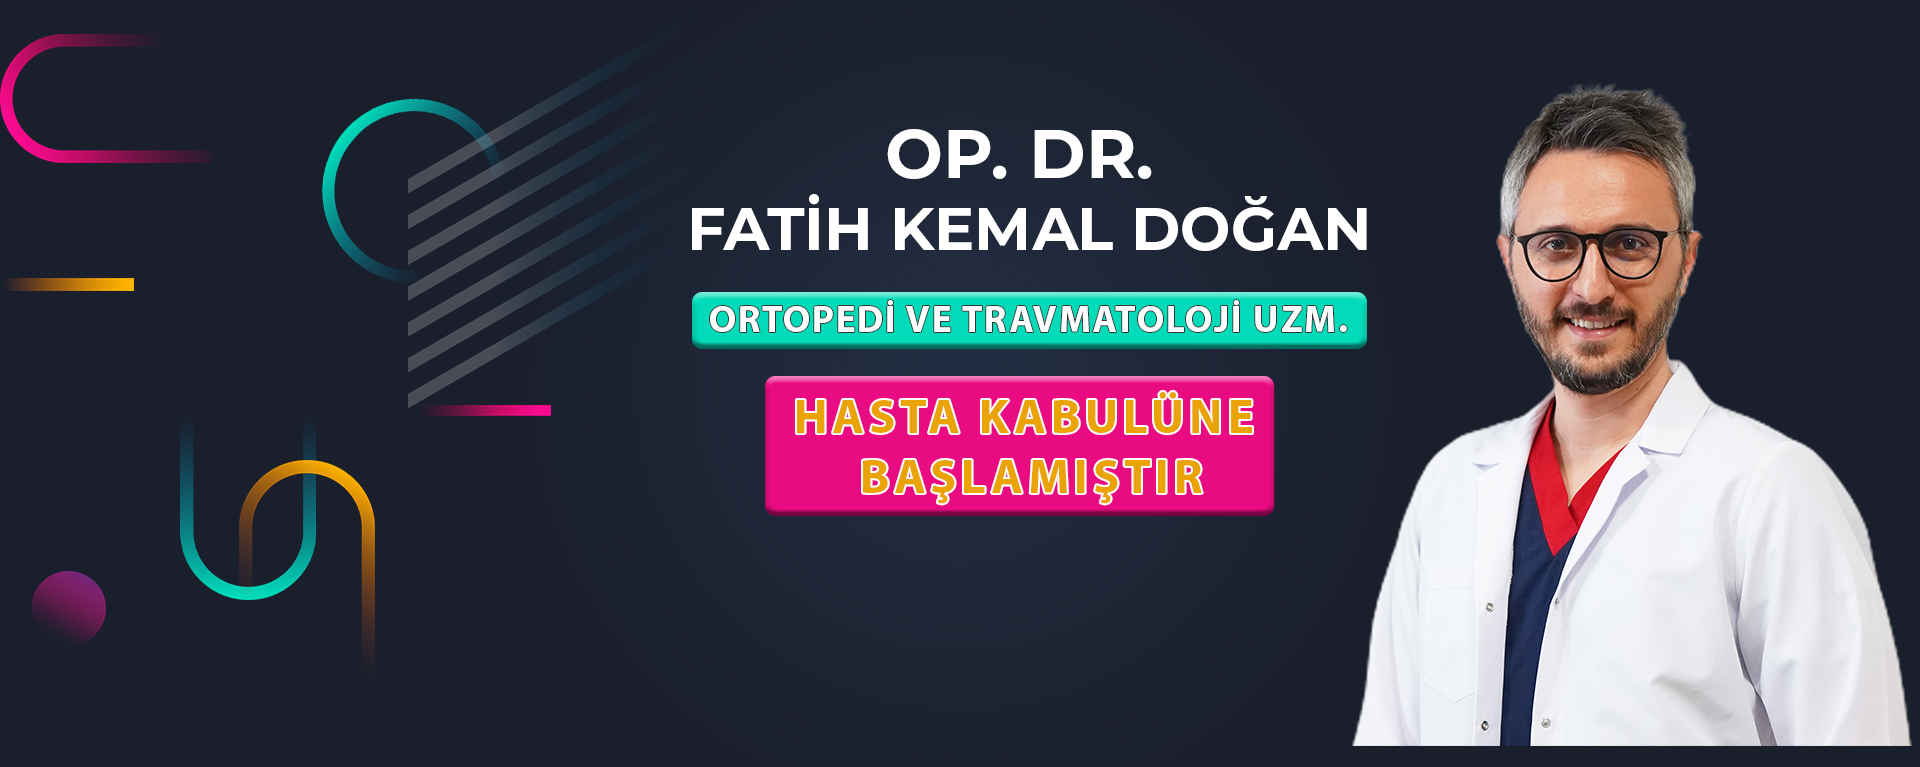 Op. Dr. Fatih Kemal Doğan